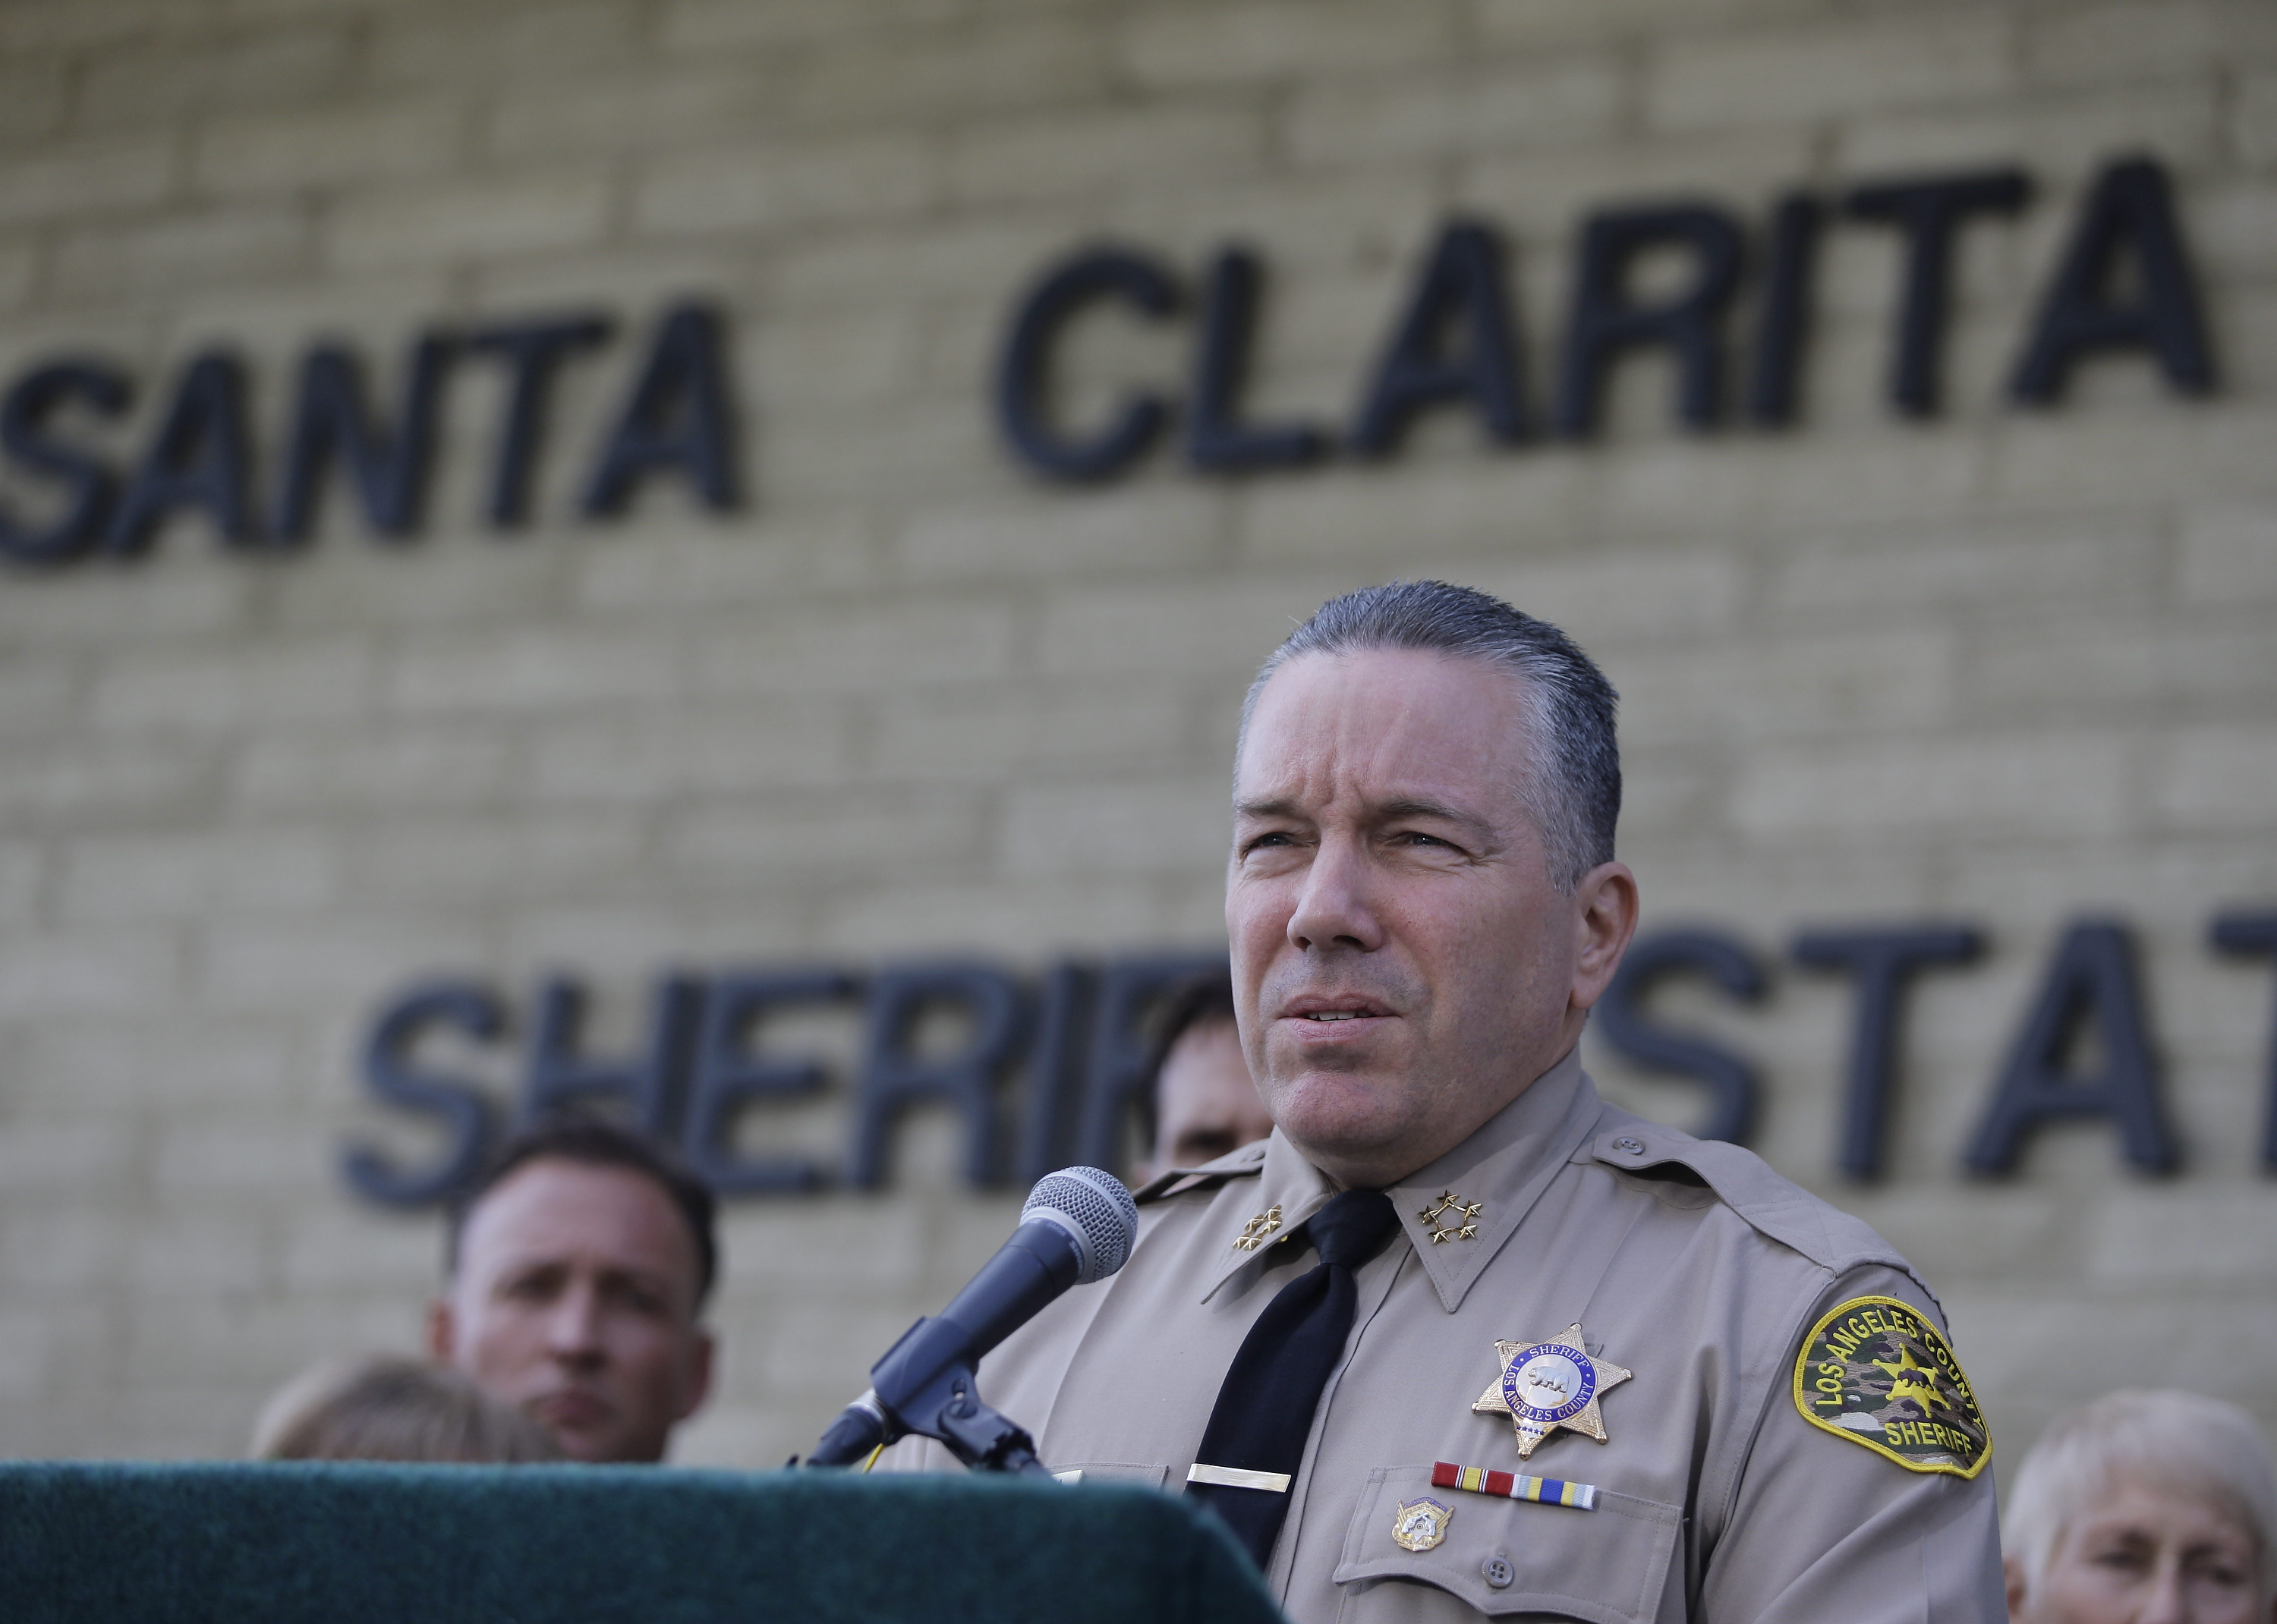 Sheriff Alex Villanueva 